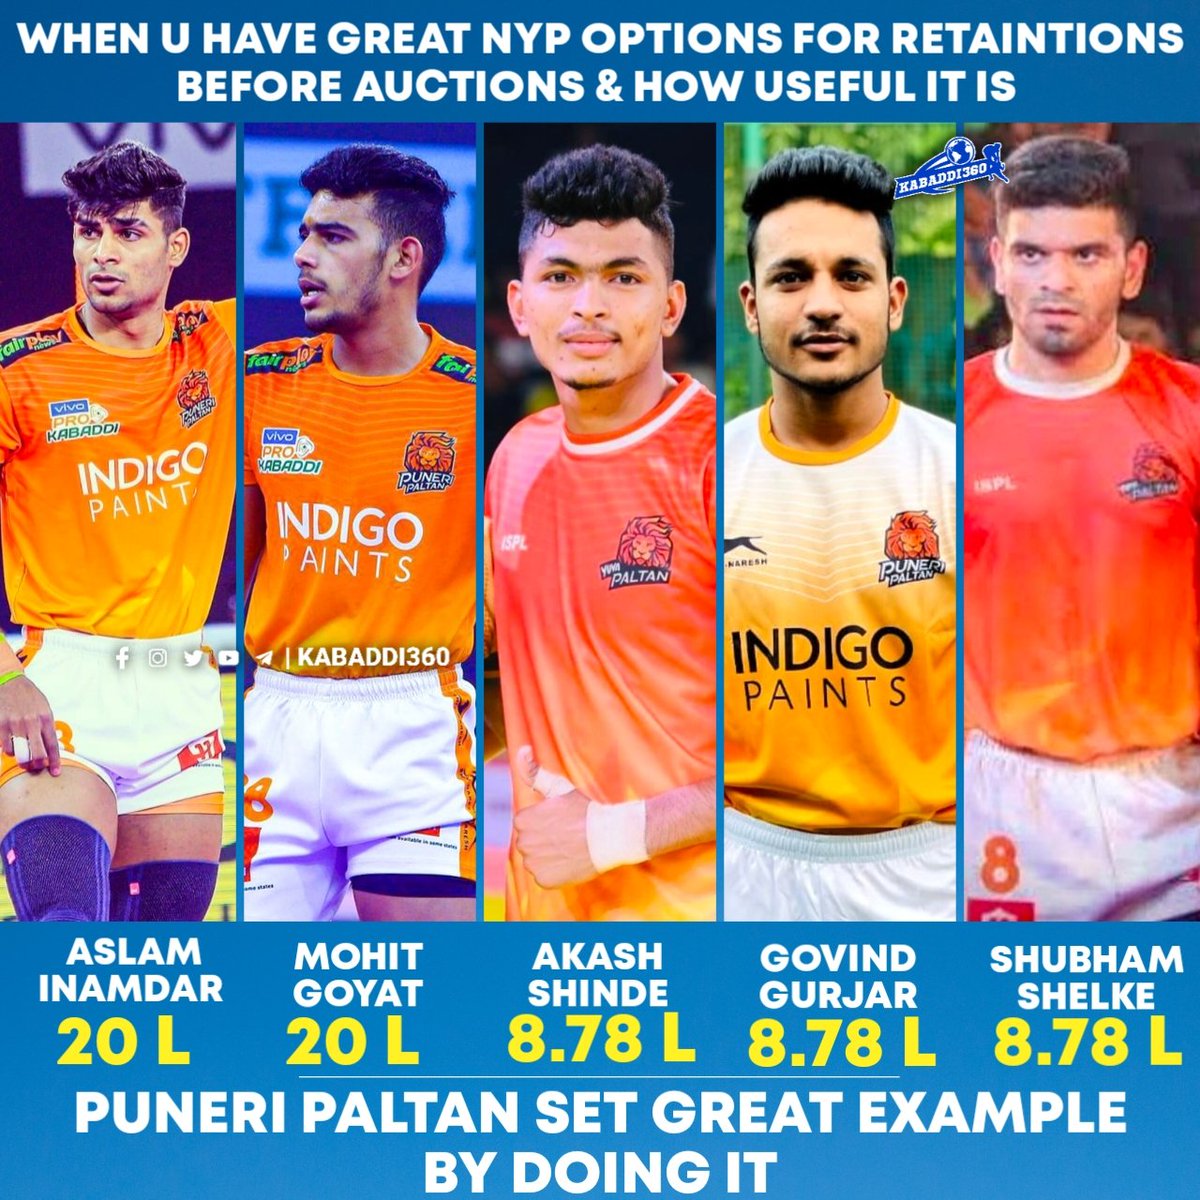 Here is Puneri Paltan NYP Category retained Players for season 9.

#PuneriPaltan
#aslaminamdar 
#MohitGoyat
#Akashshknde
#GovindGurjar
#ShubhamShelke
#VivoProKabaddi 
#Kabaddi360